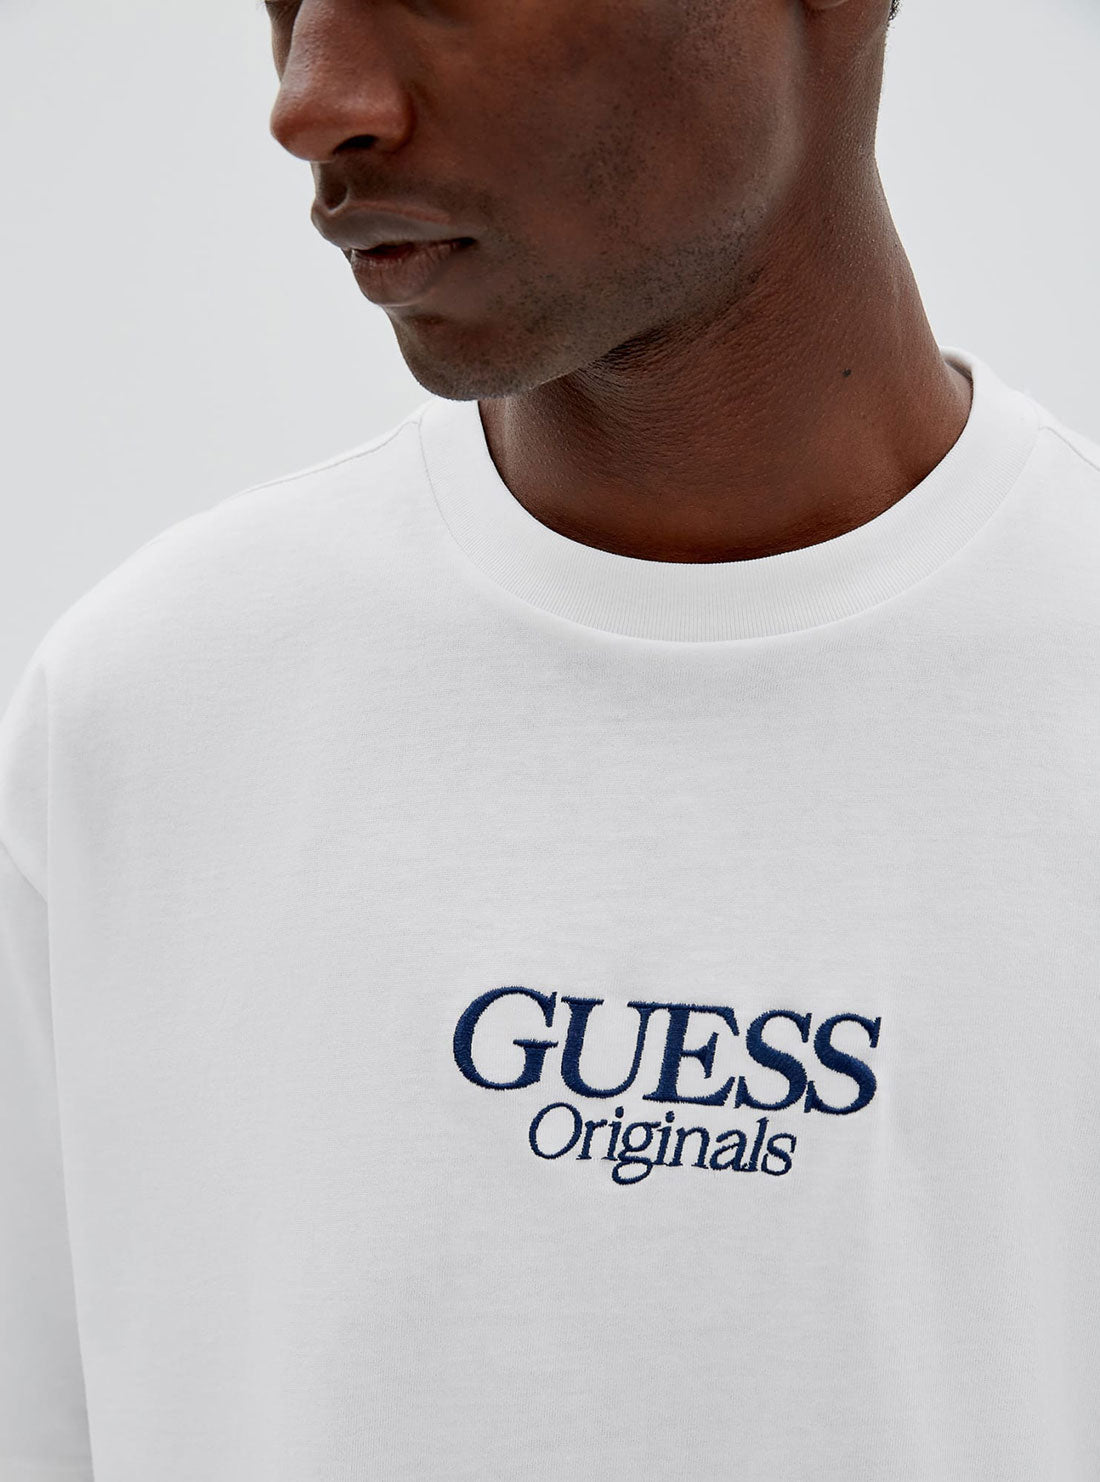 GUESS Mens GUESS Originals White Austin Logo T-Shirt M2GI00K9XF2 Detail View